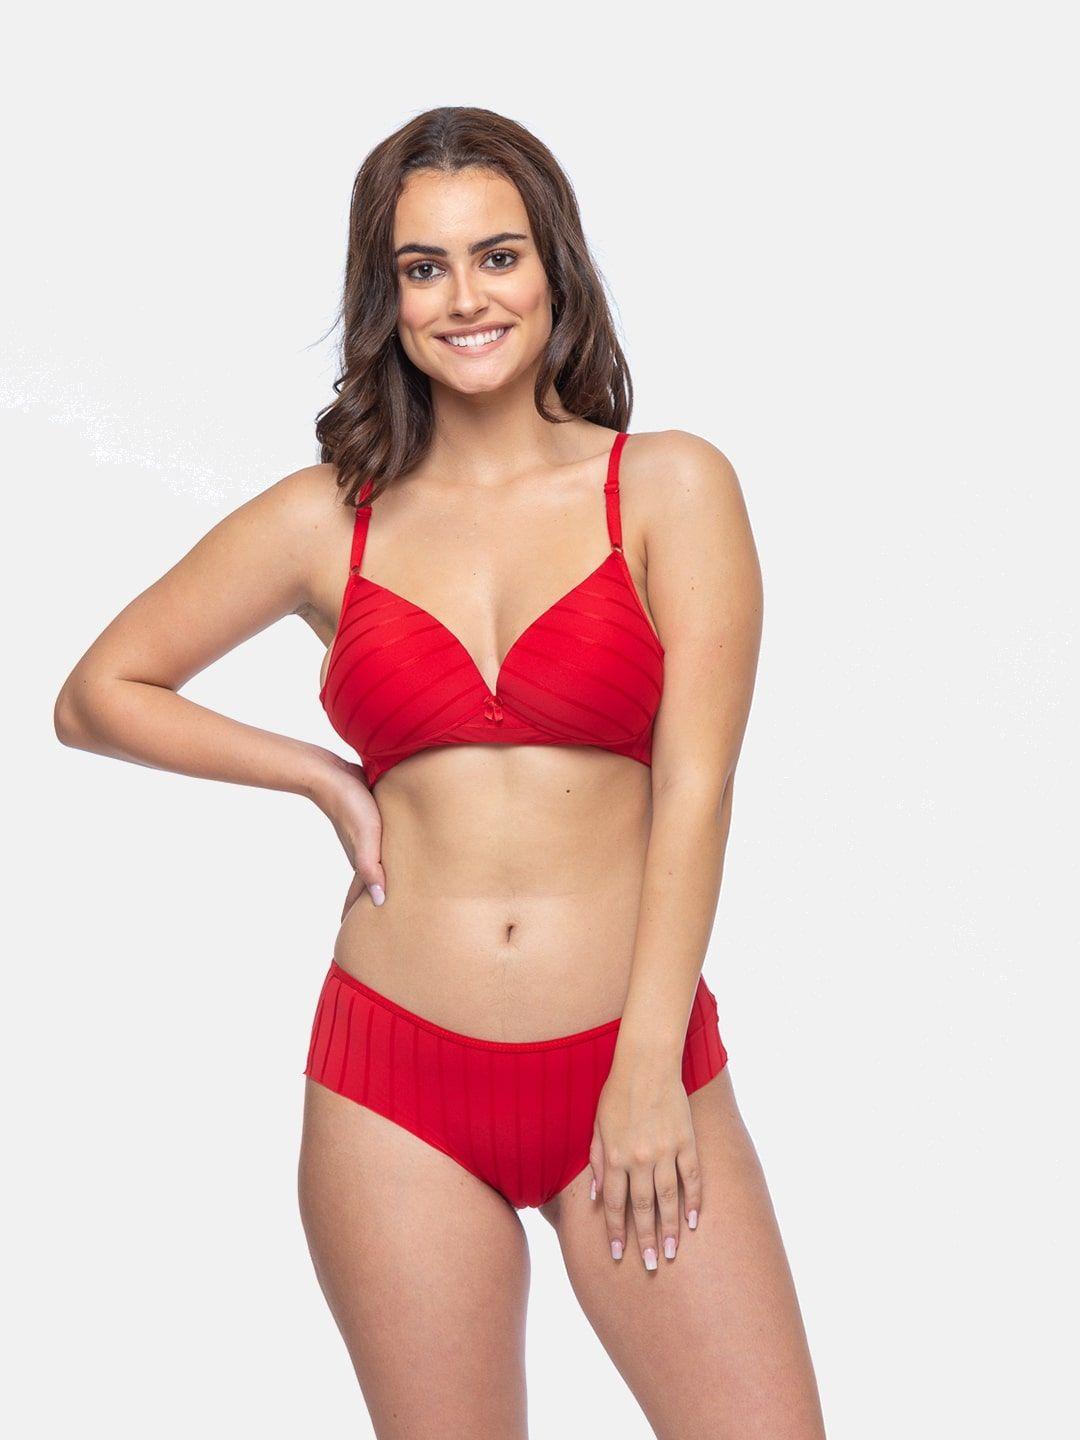 curwish-women-red-striped-bikini-lingerie-set-sbb-01r